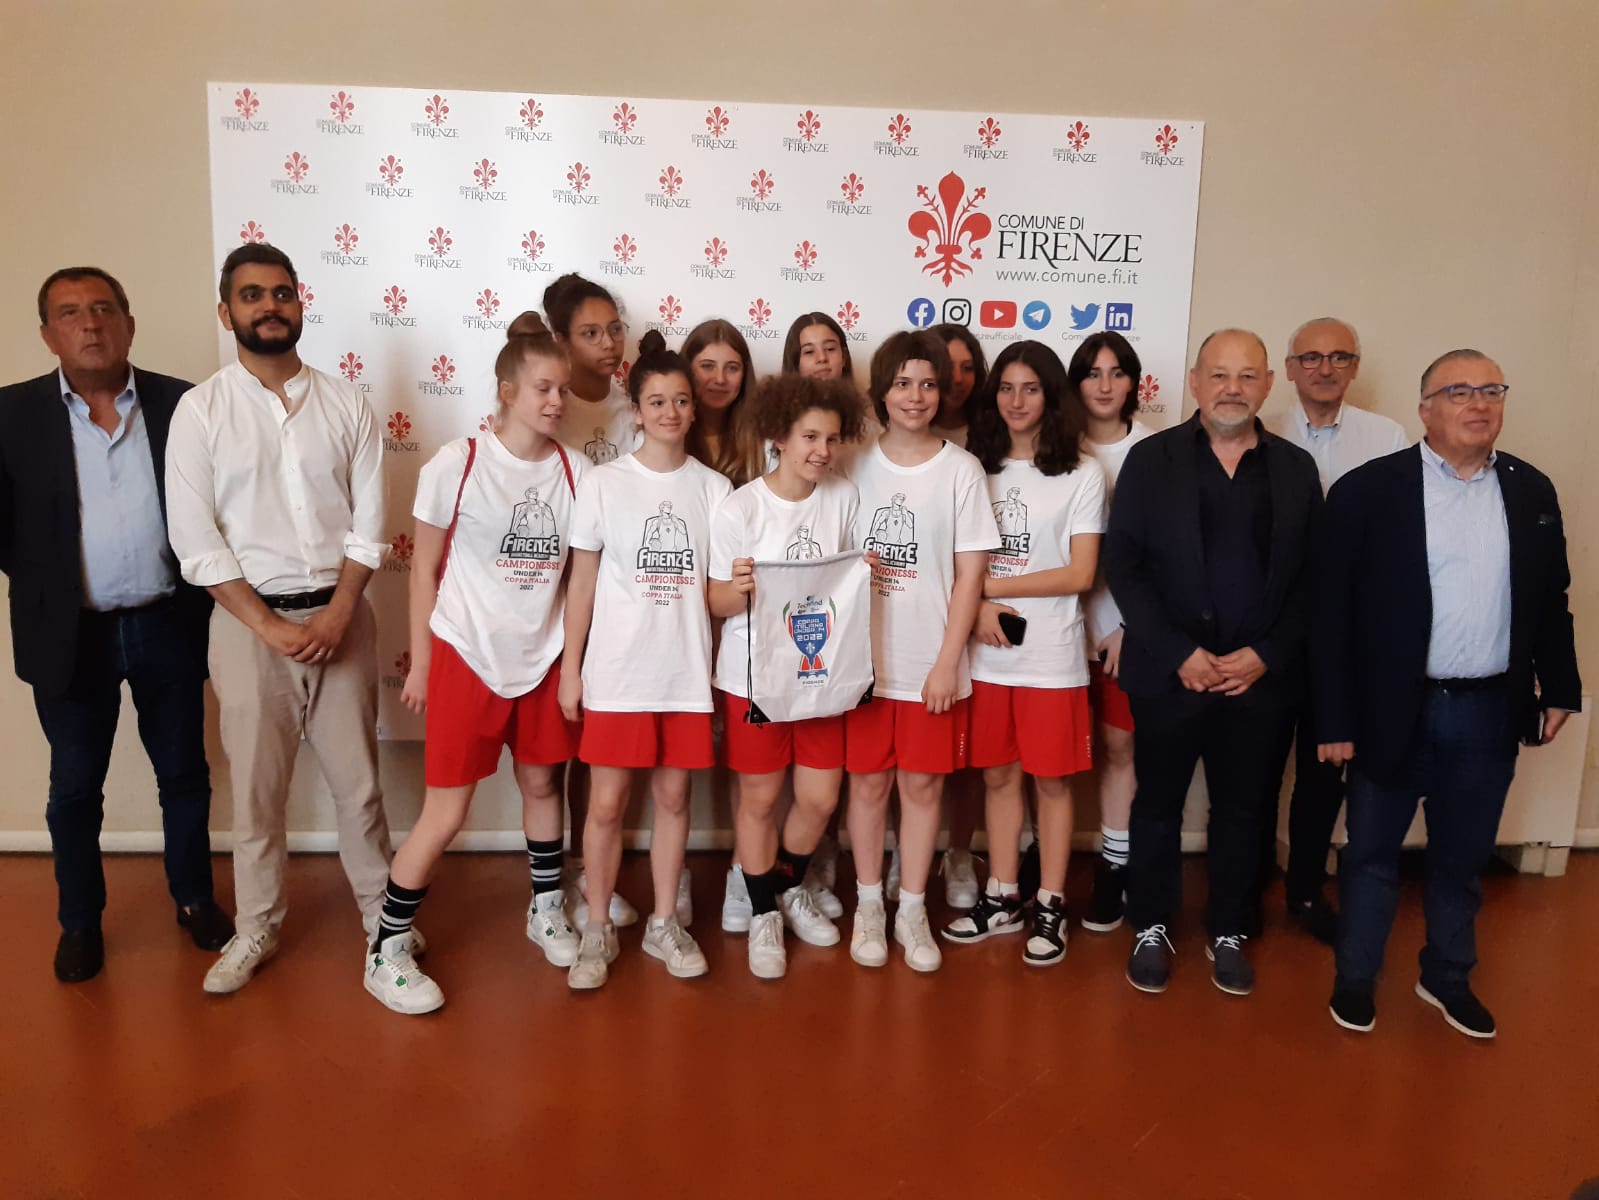 Coppa Italiana Under 14 di basket femminile - presentazione - fonte Comune di Firenze